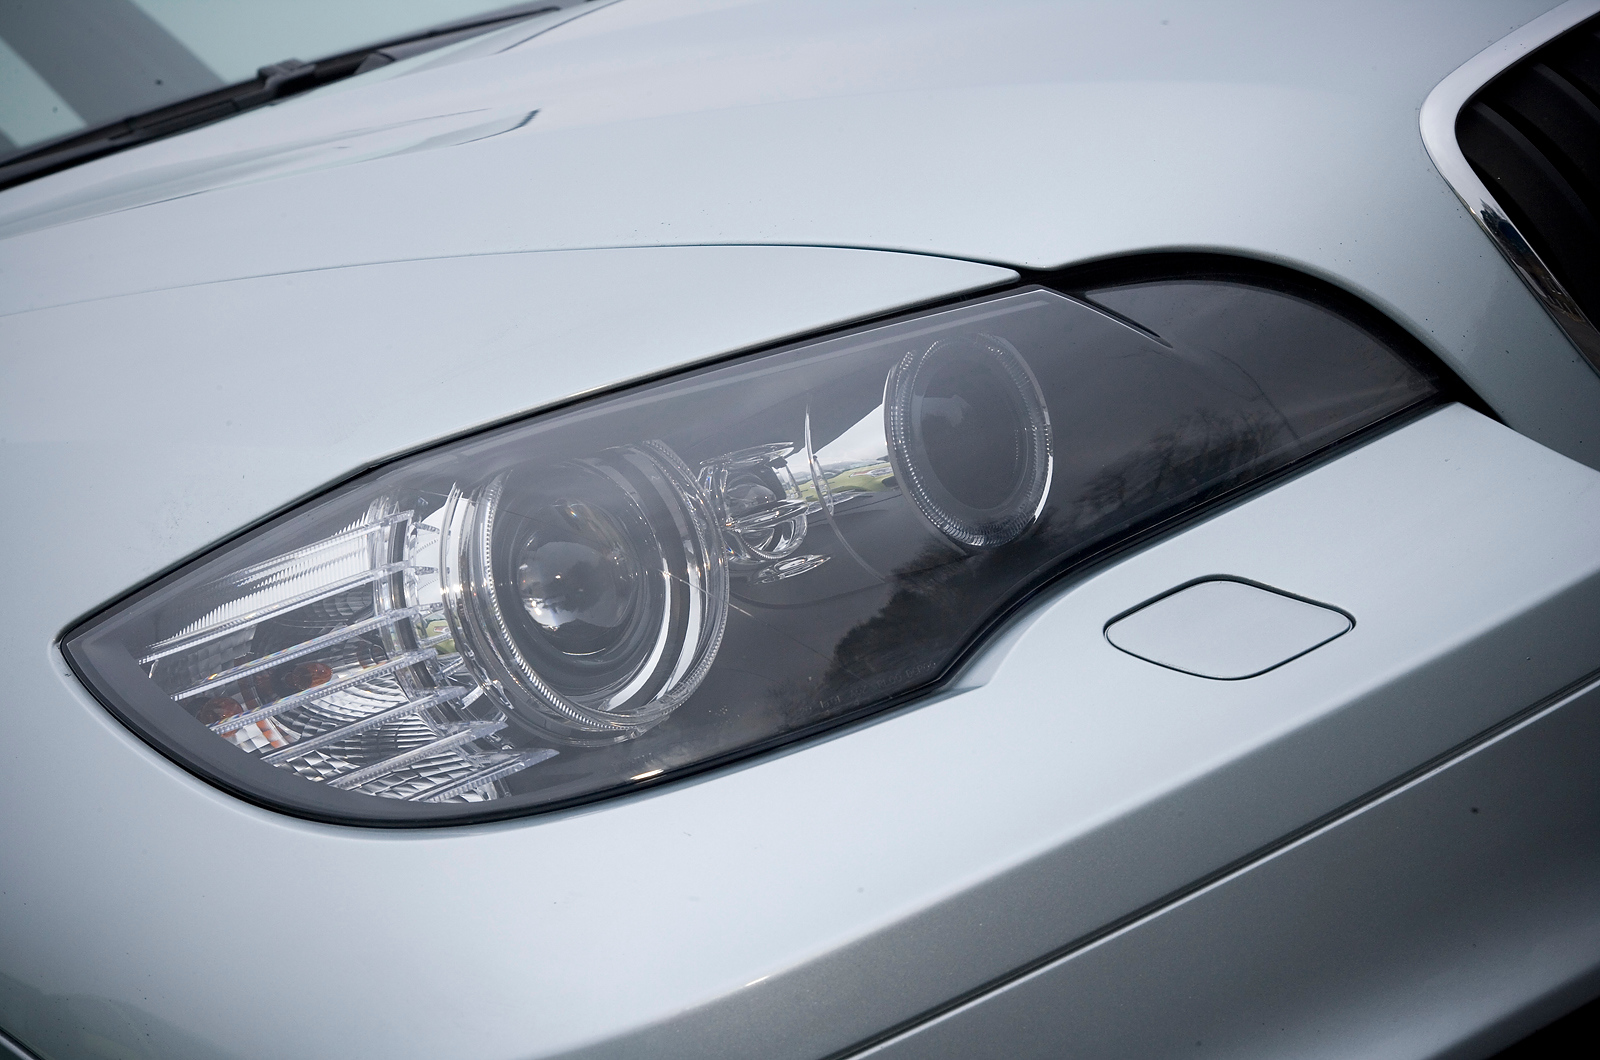 BMW X5's xenon headlights